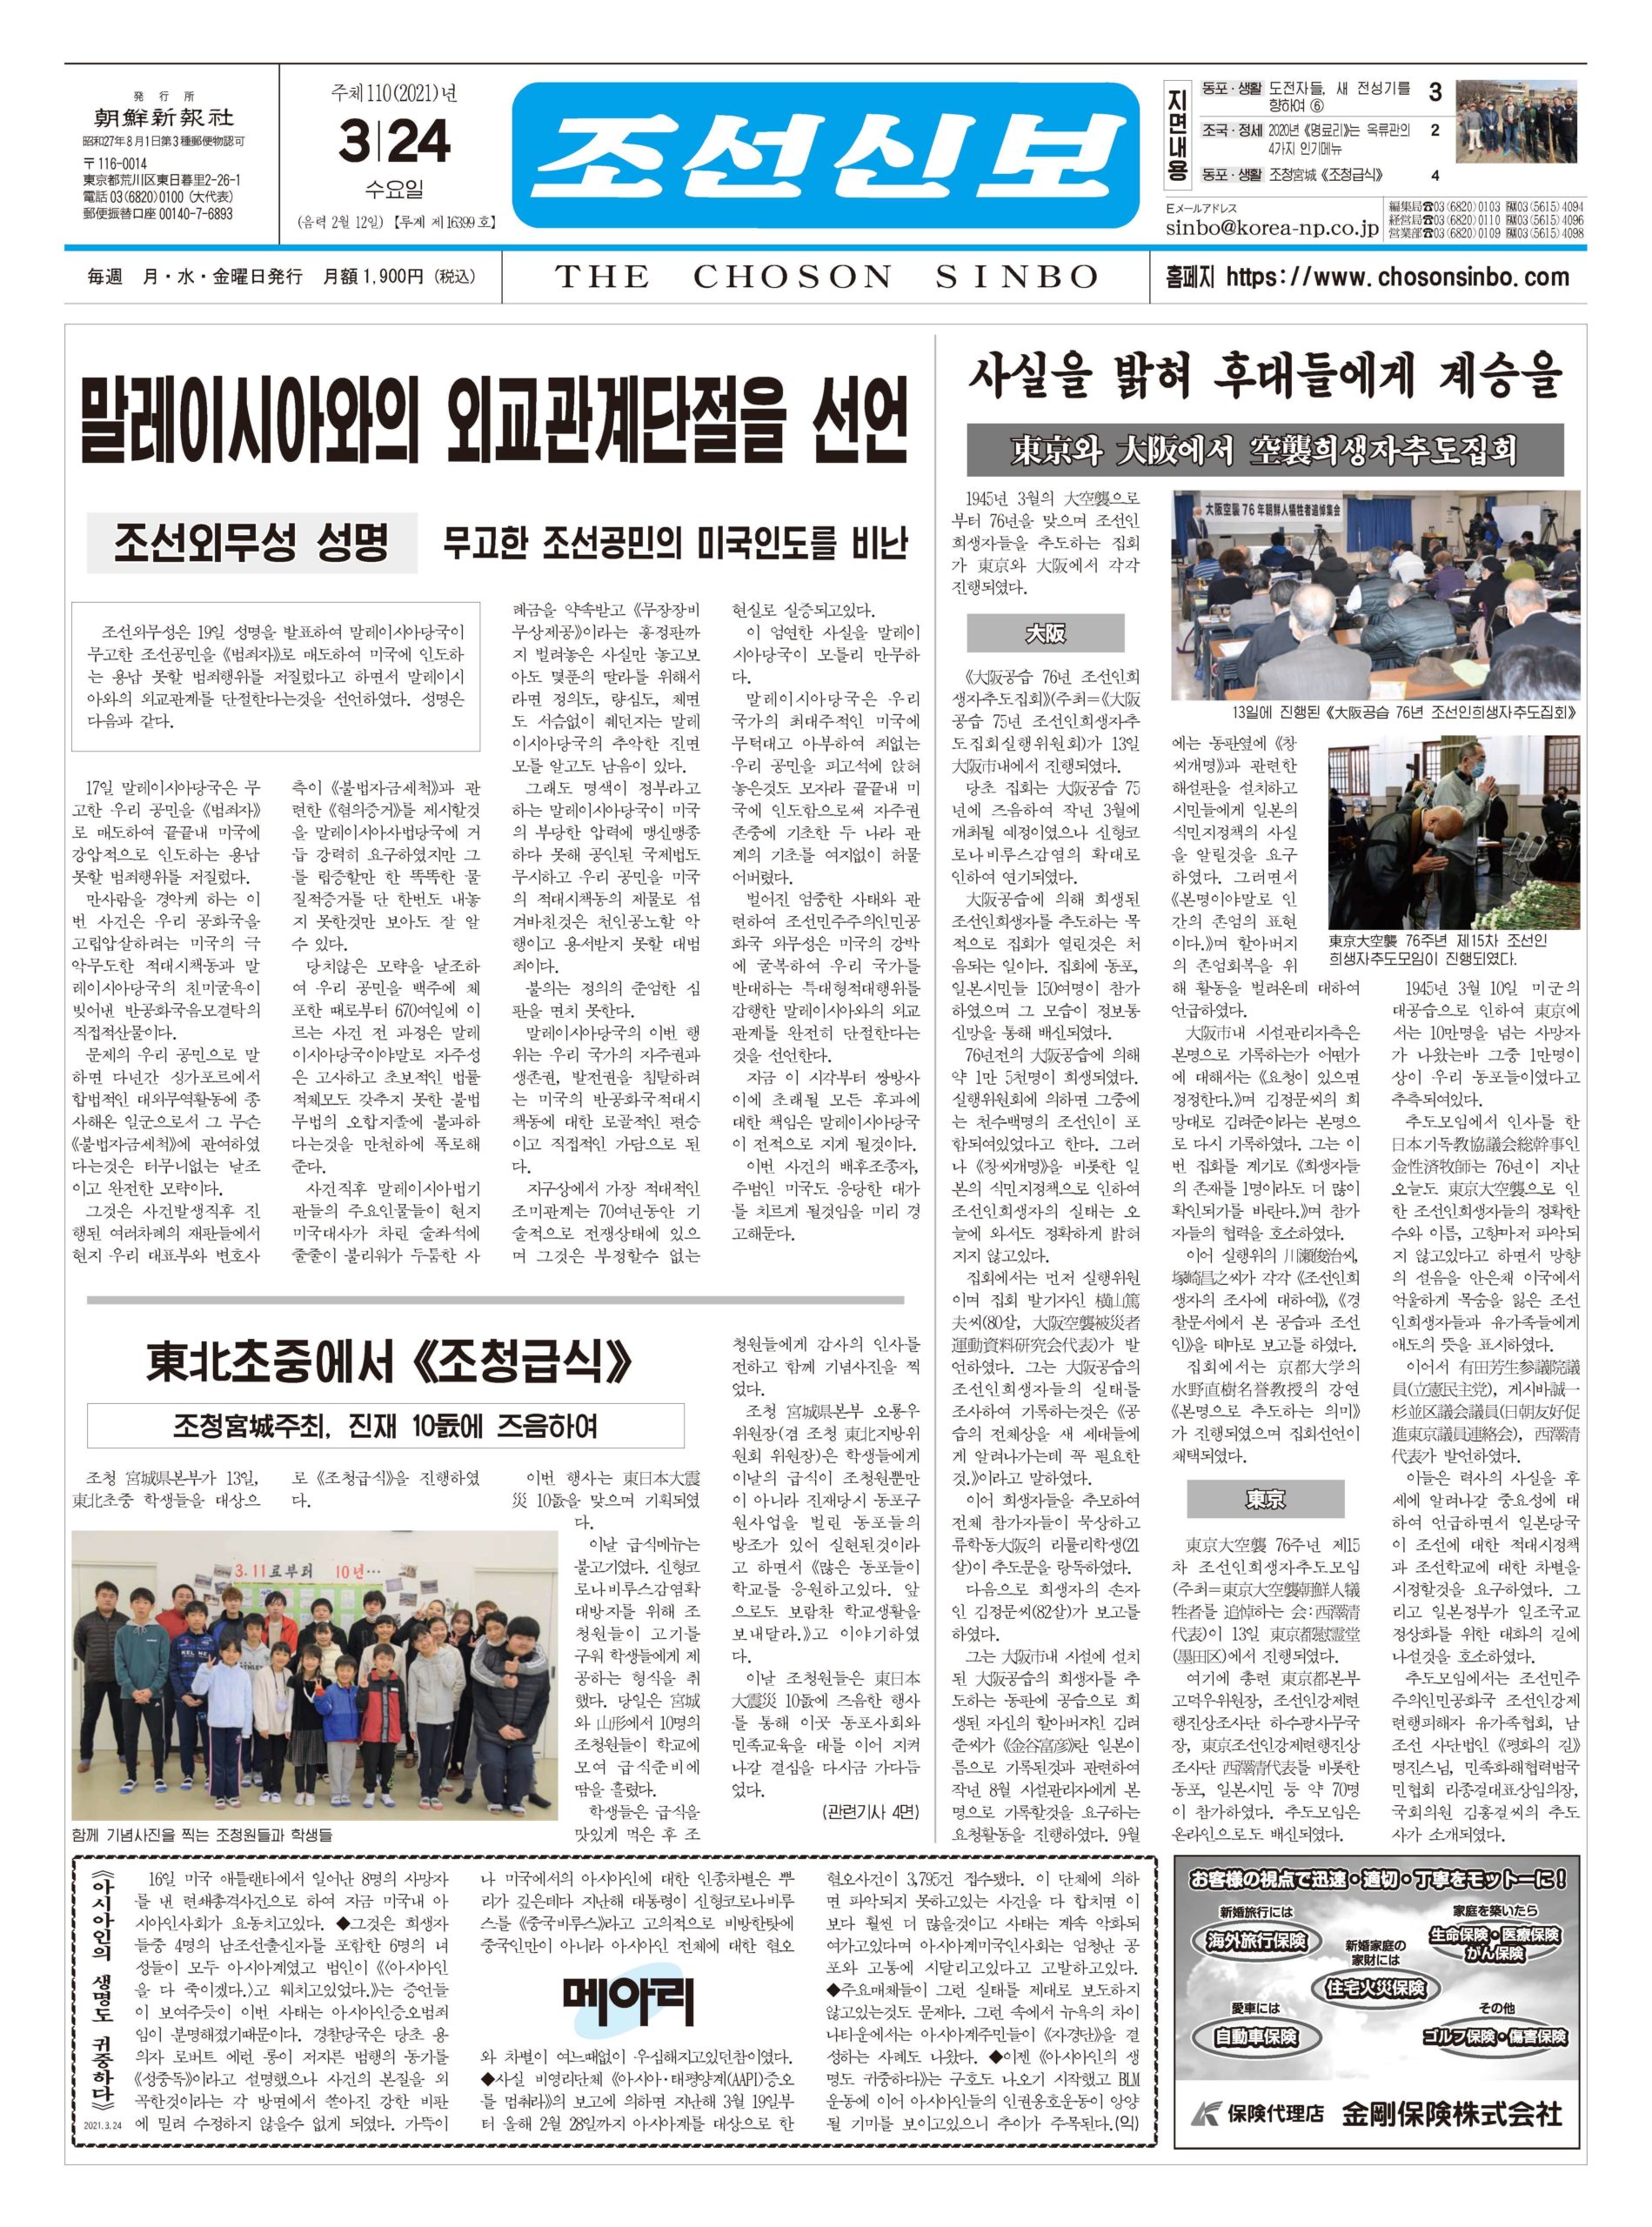 North Korea newspapers 9 Choson Sinbo‎ scaled